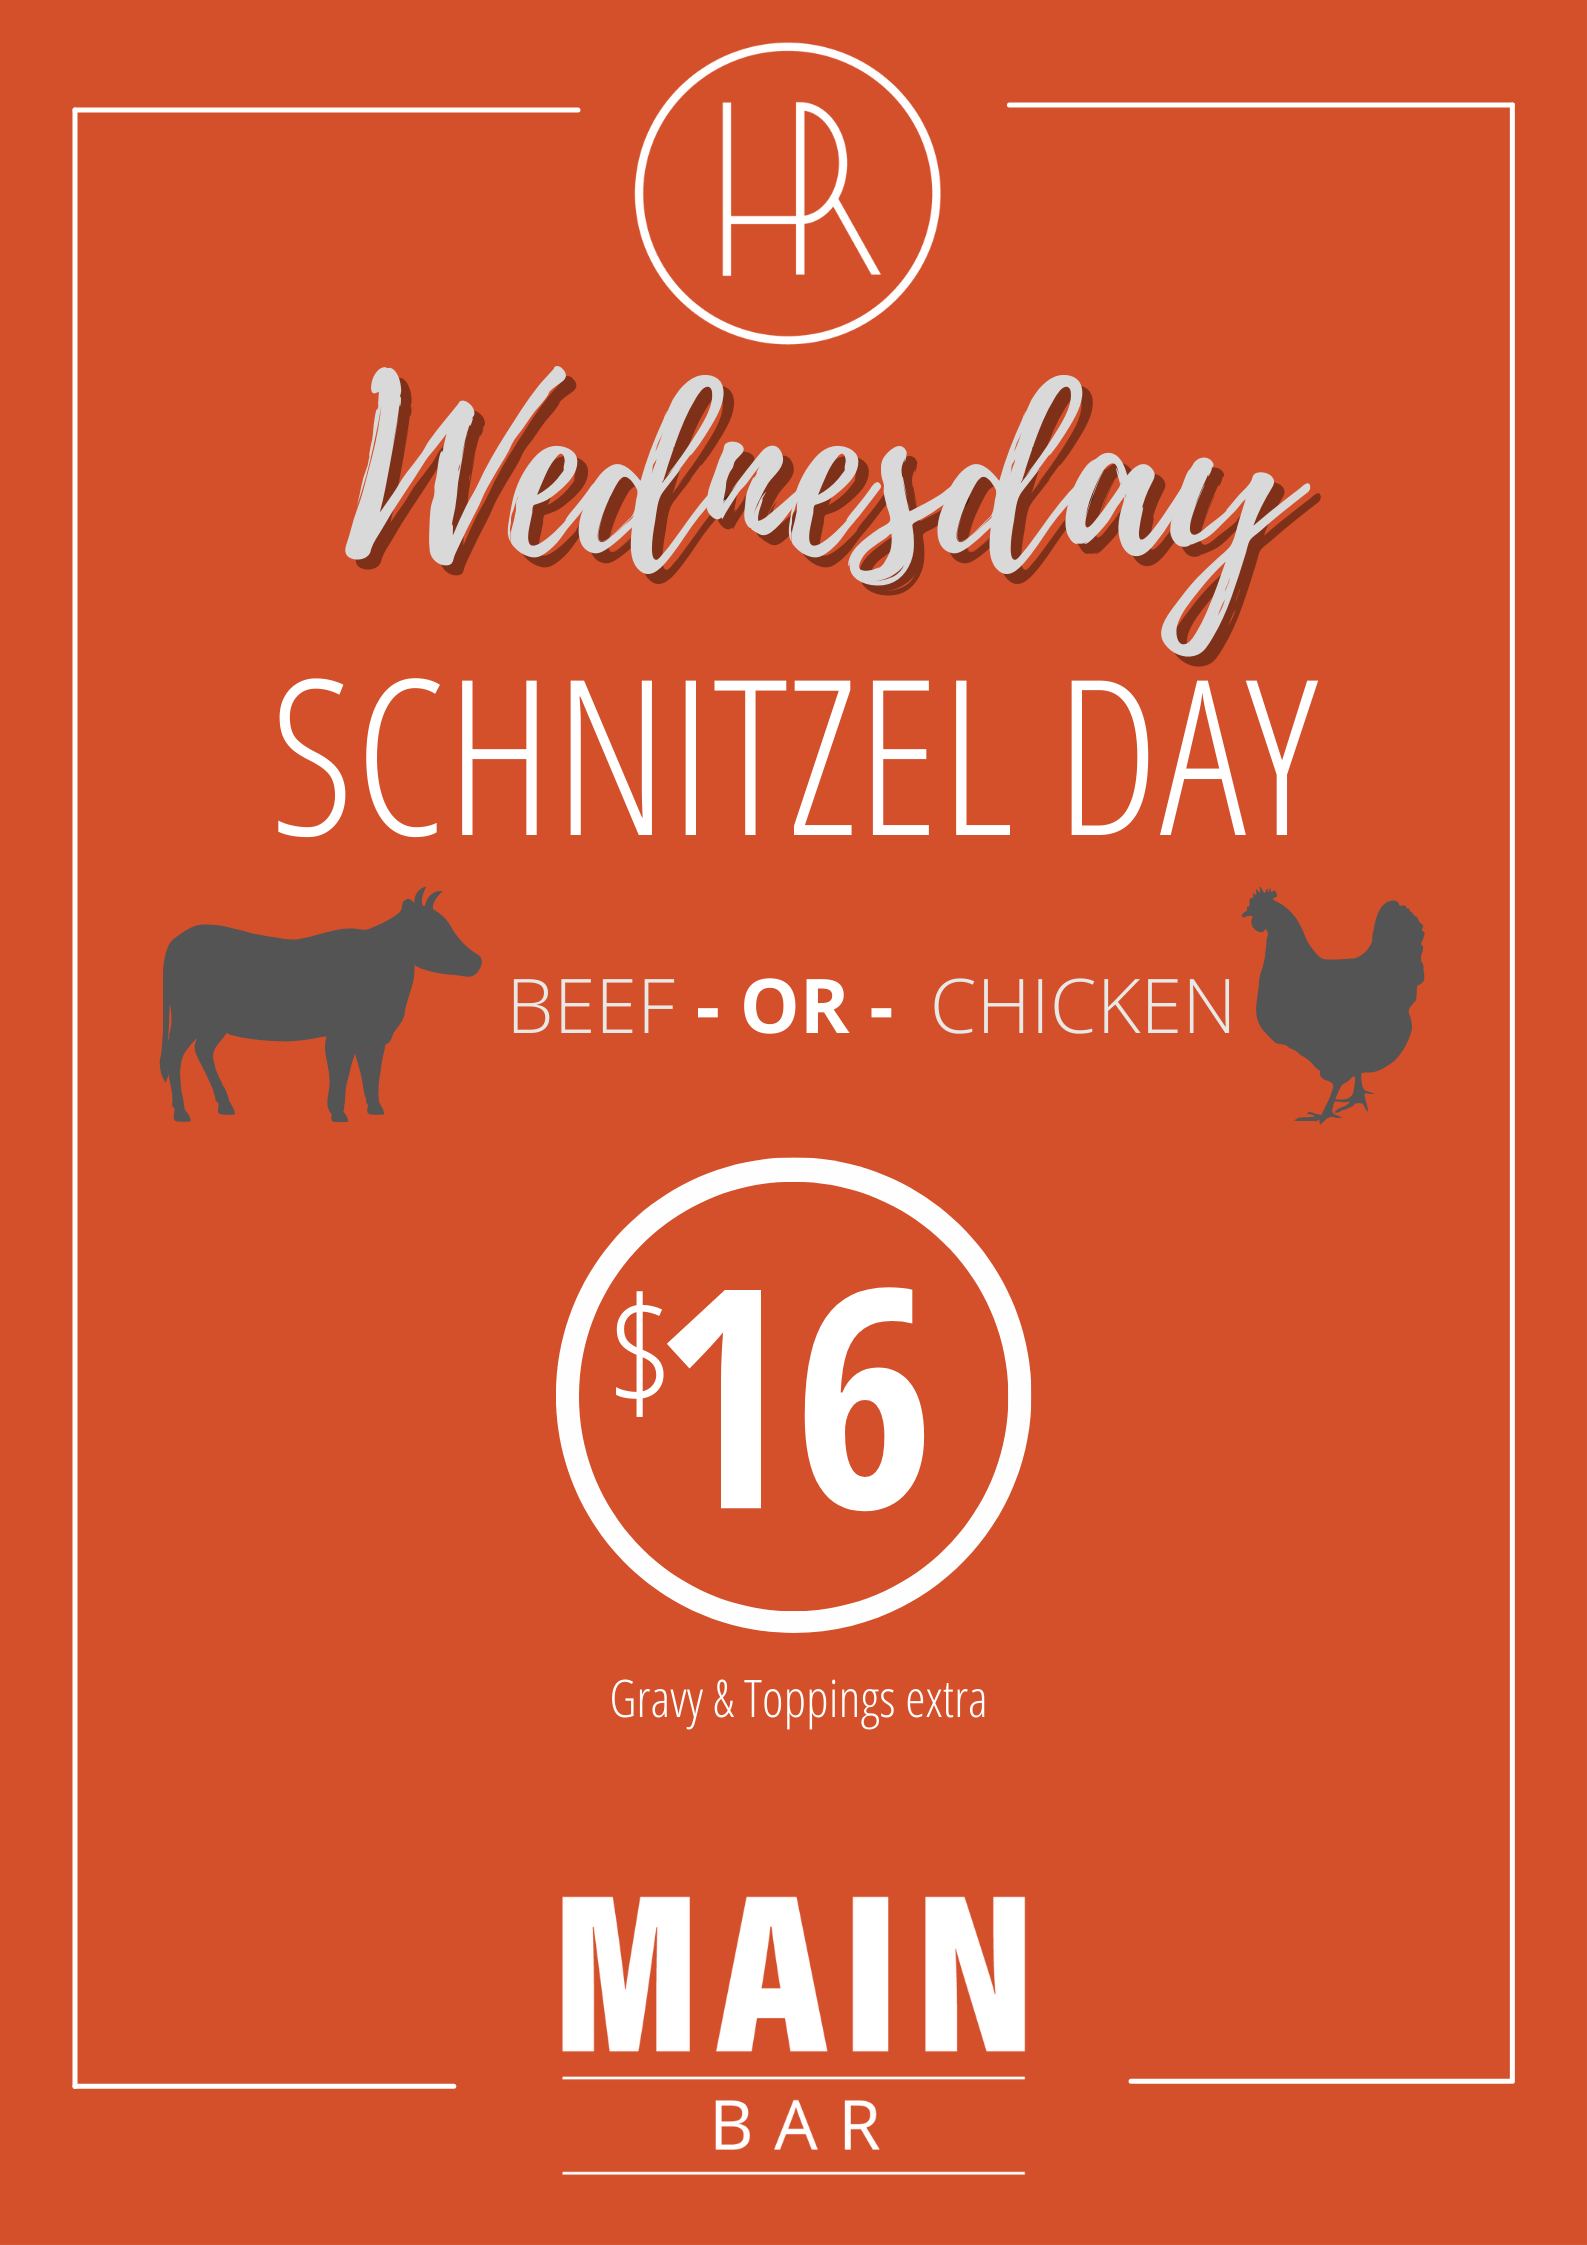 wednesday- schnitzel day.png